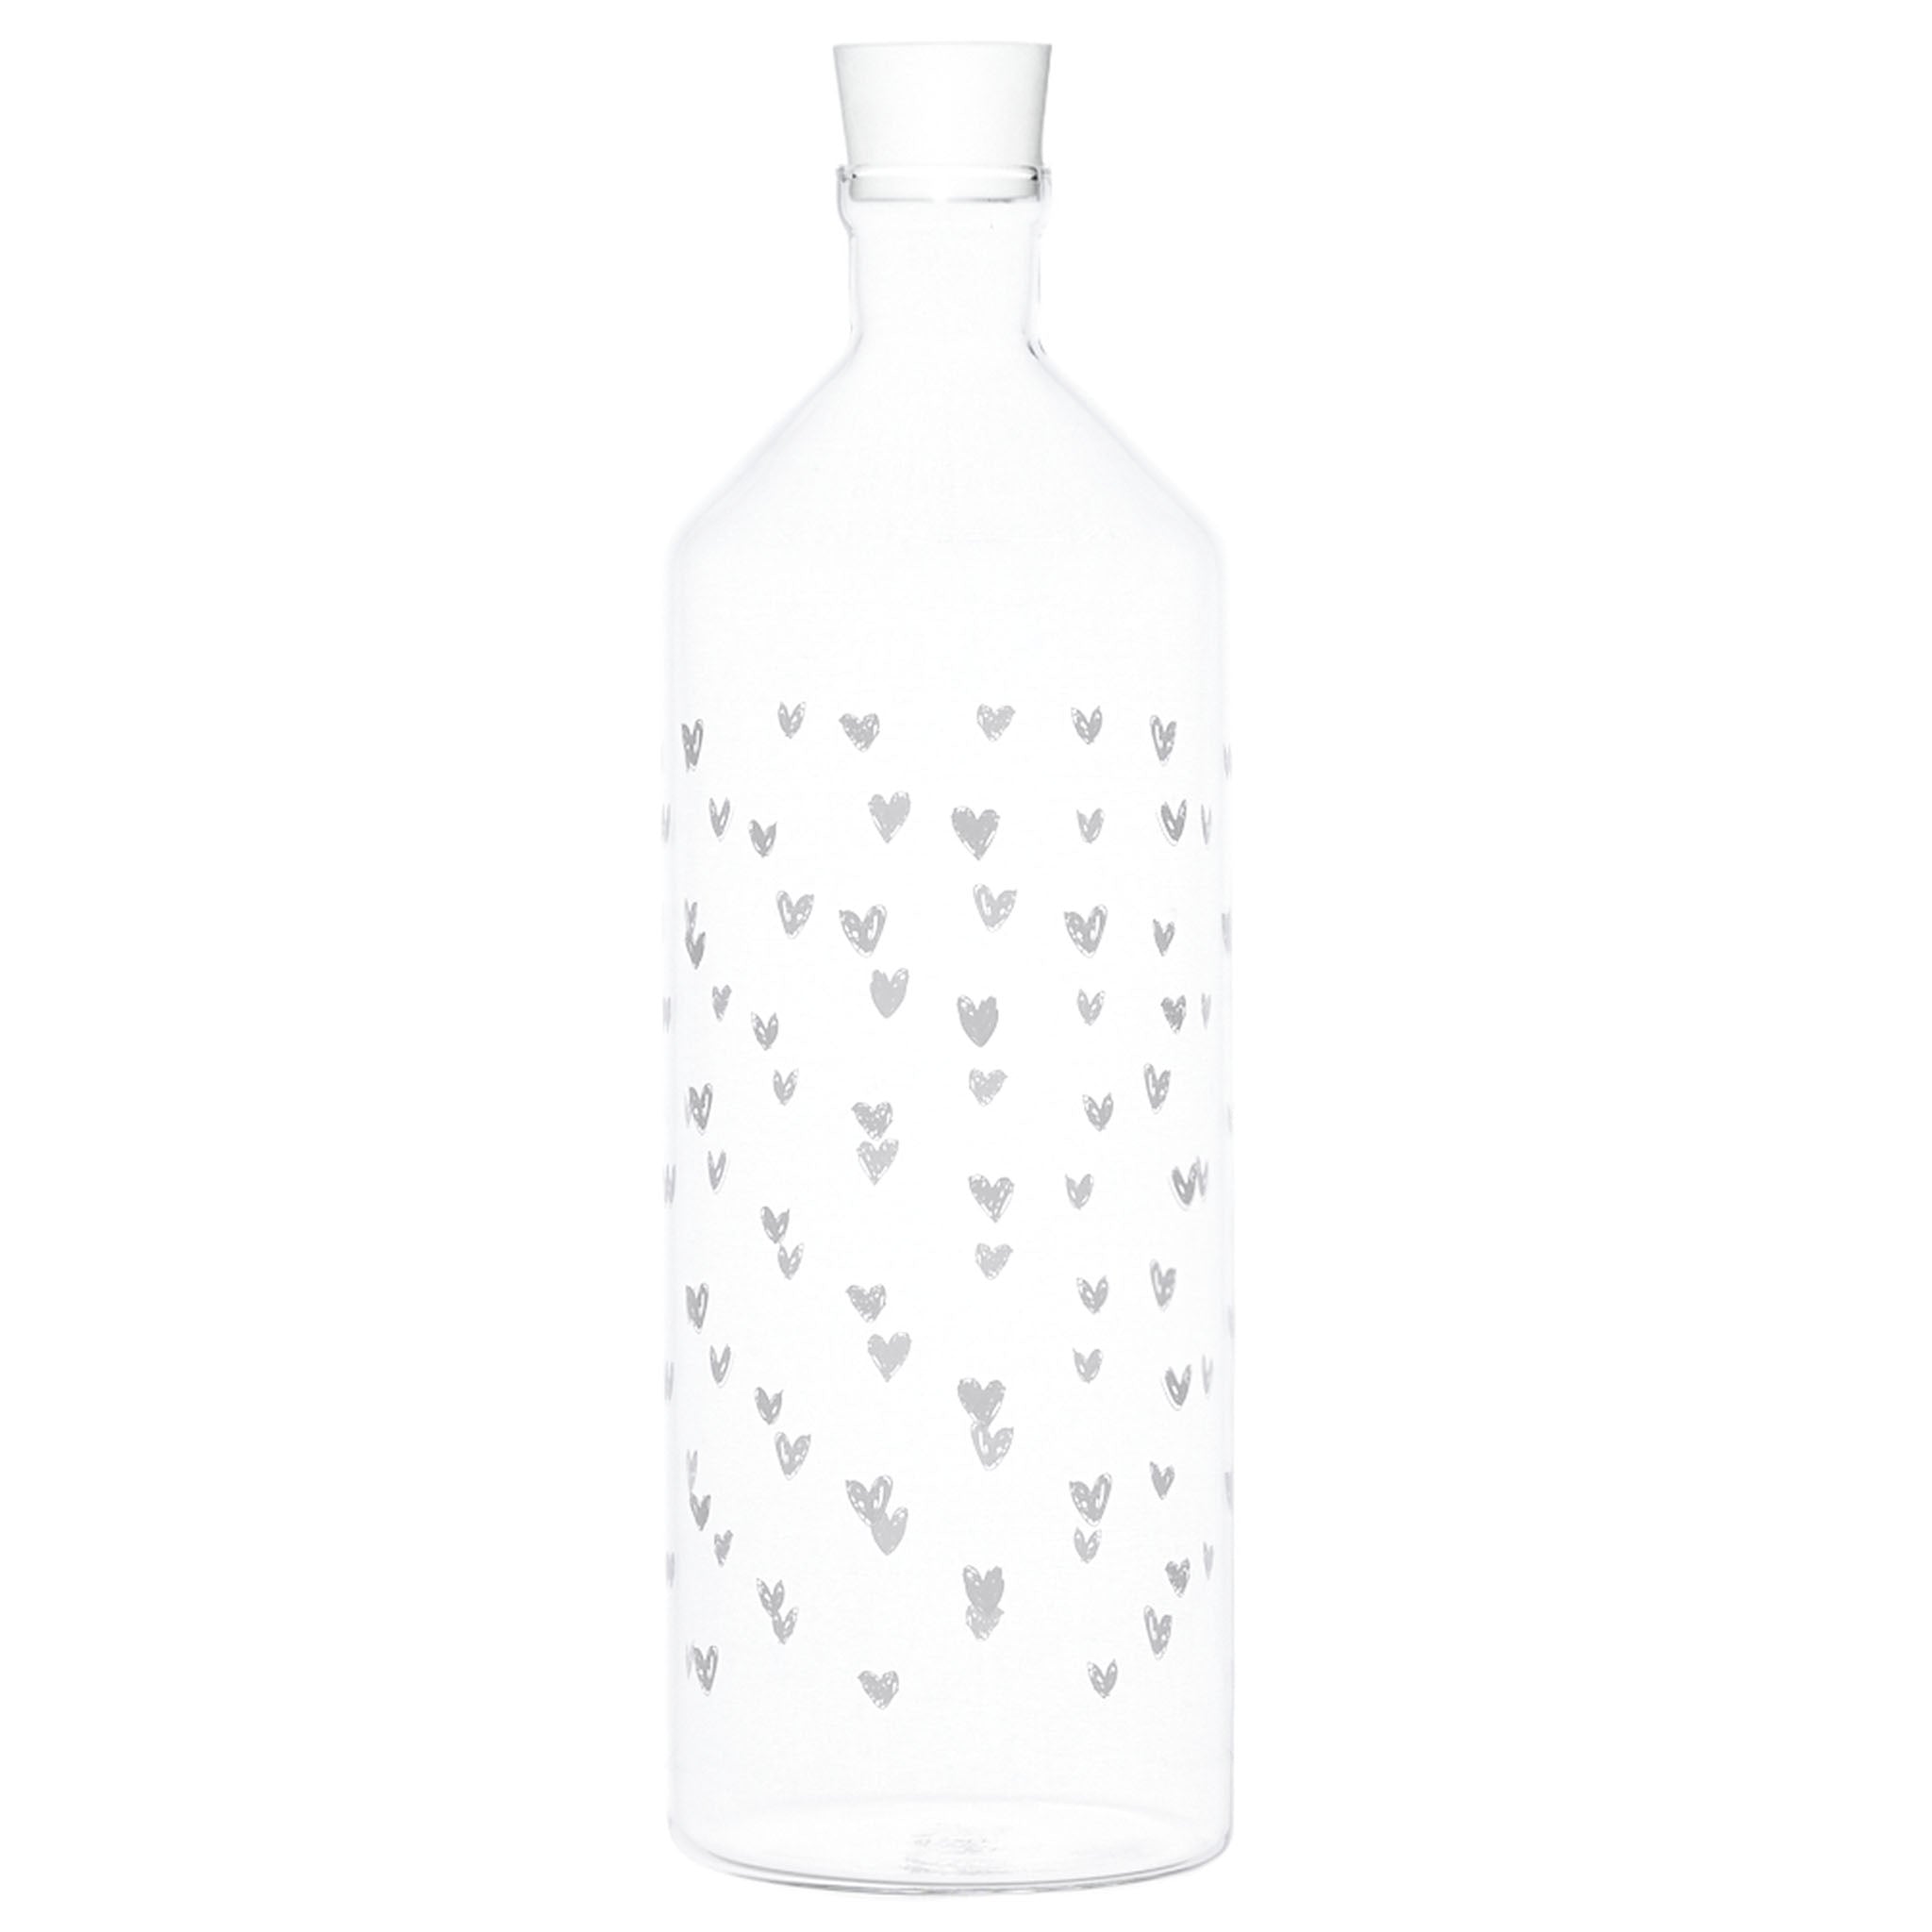 Bottle upholstery of hearts